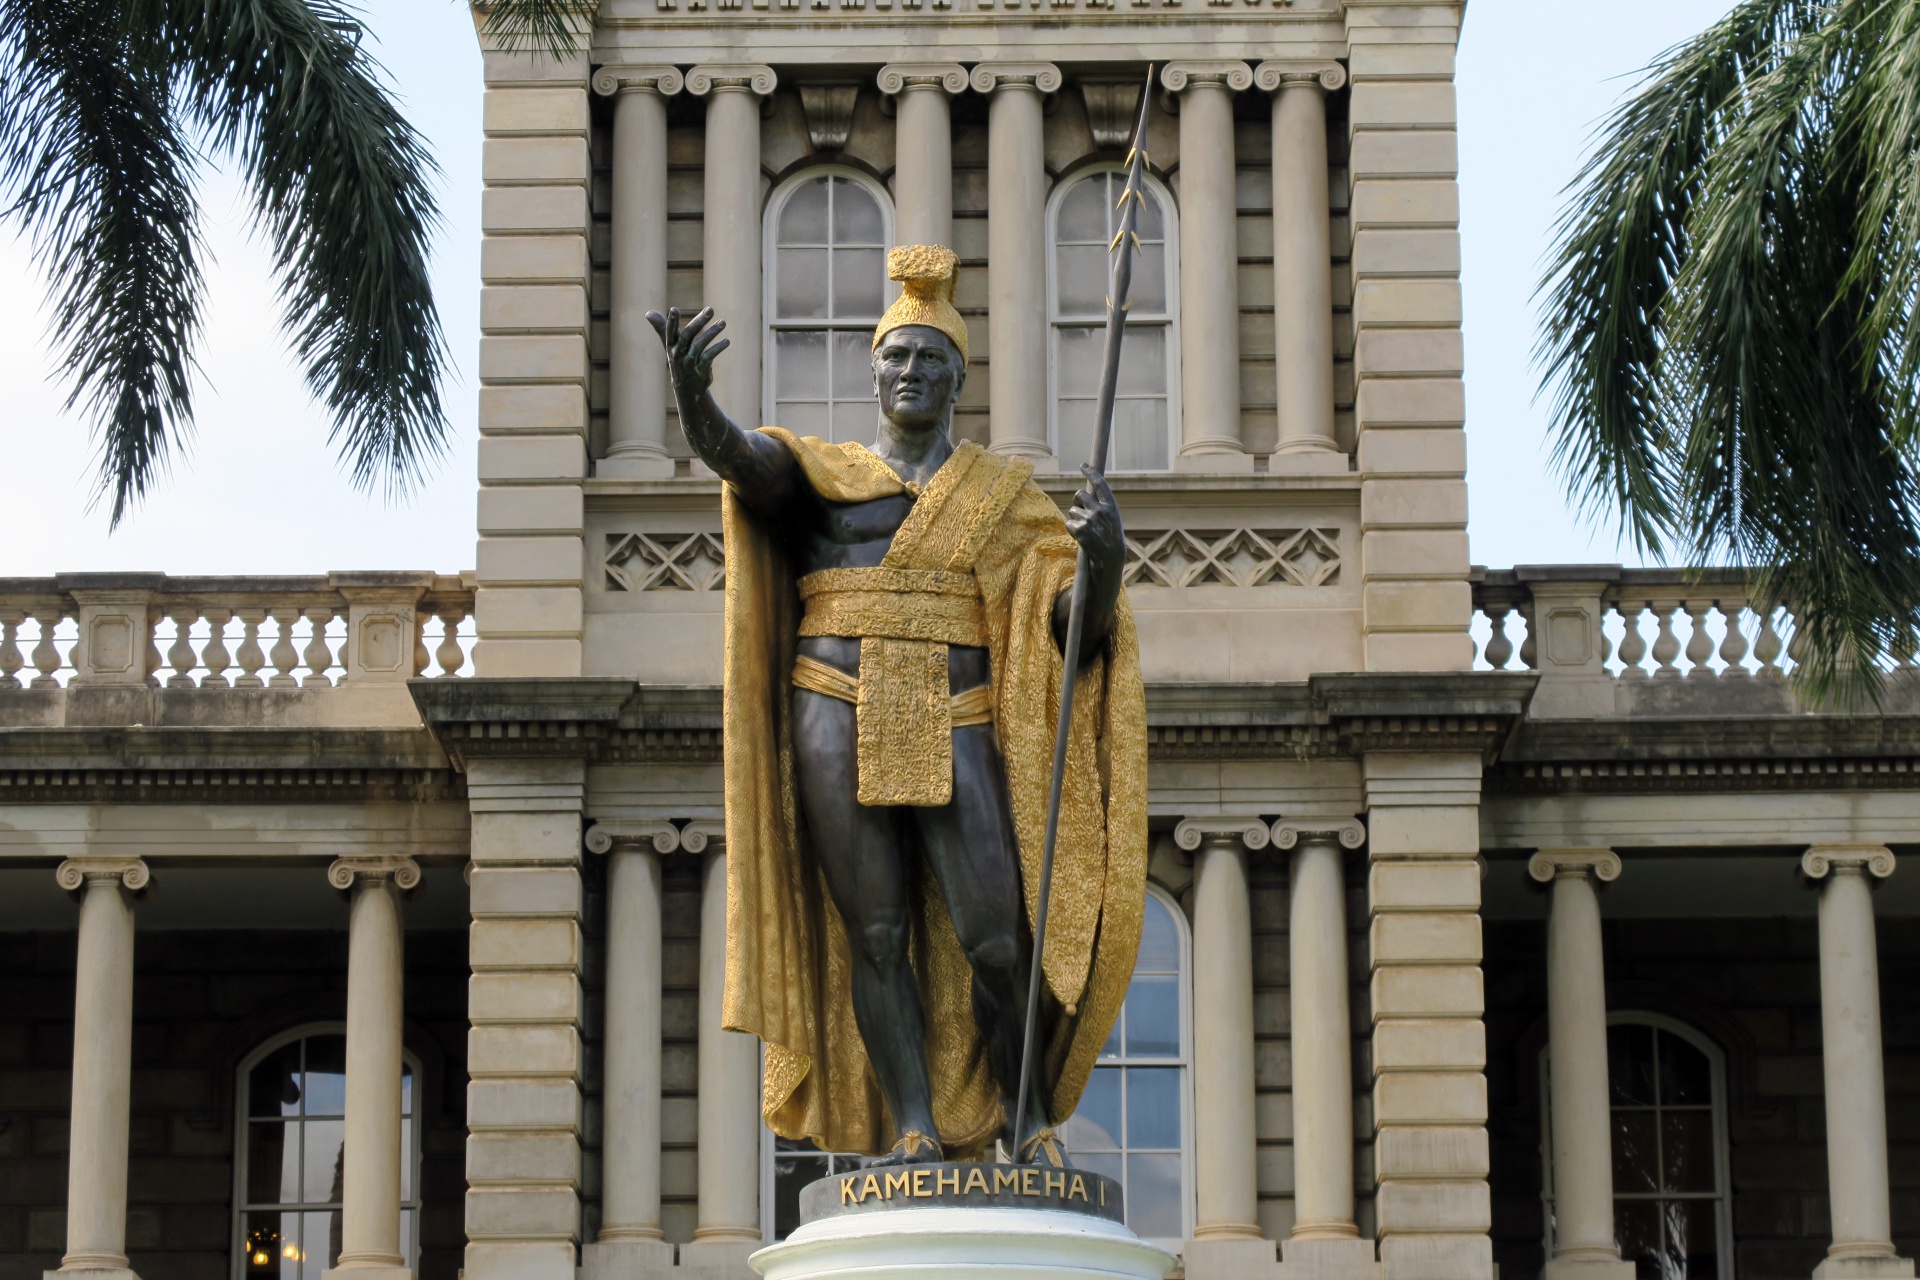 King Kamehameha Statue at Iolani Palace